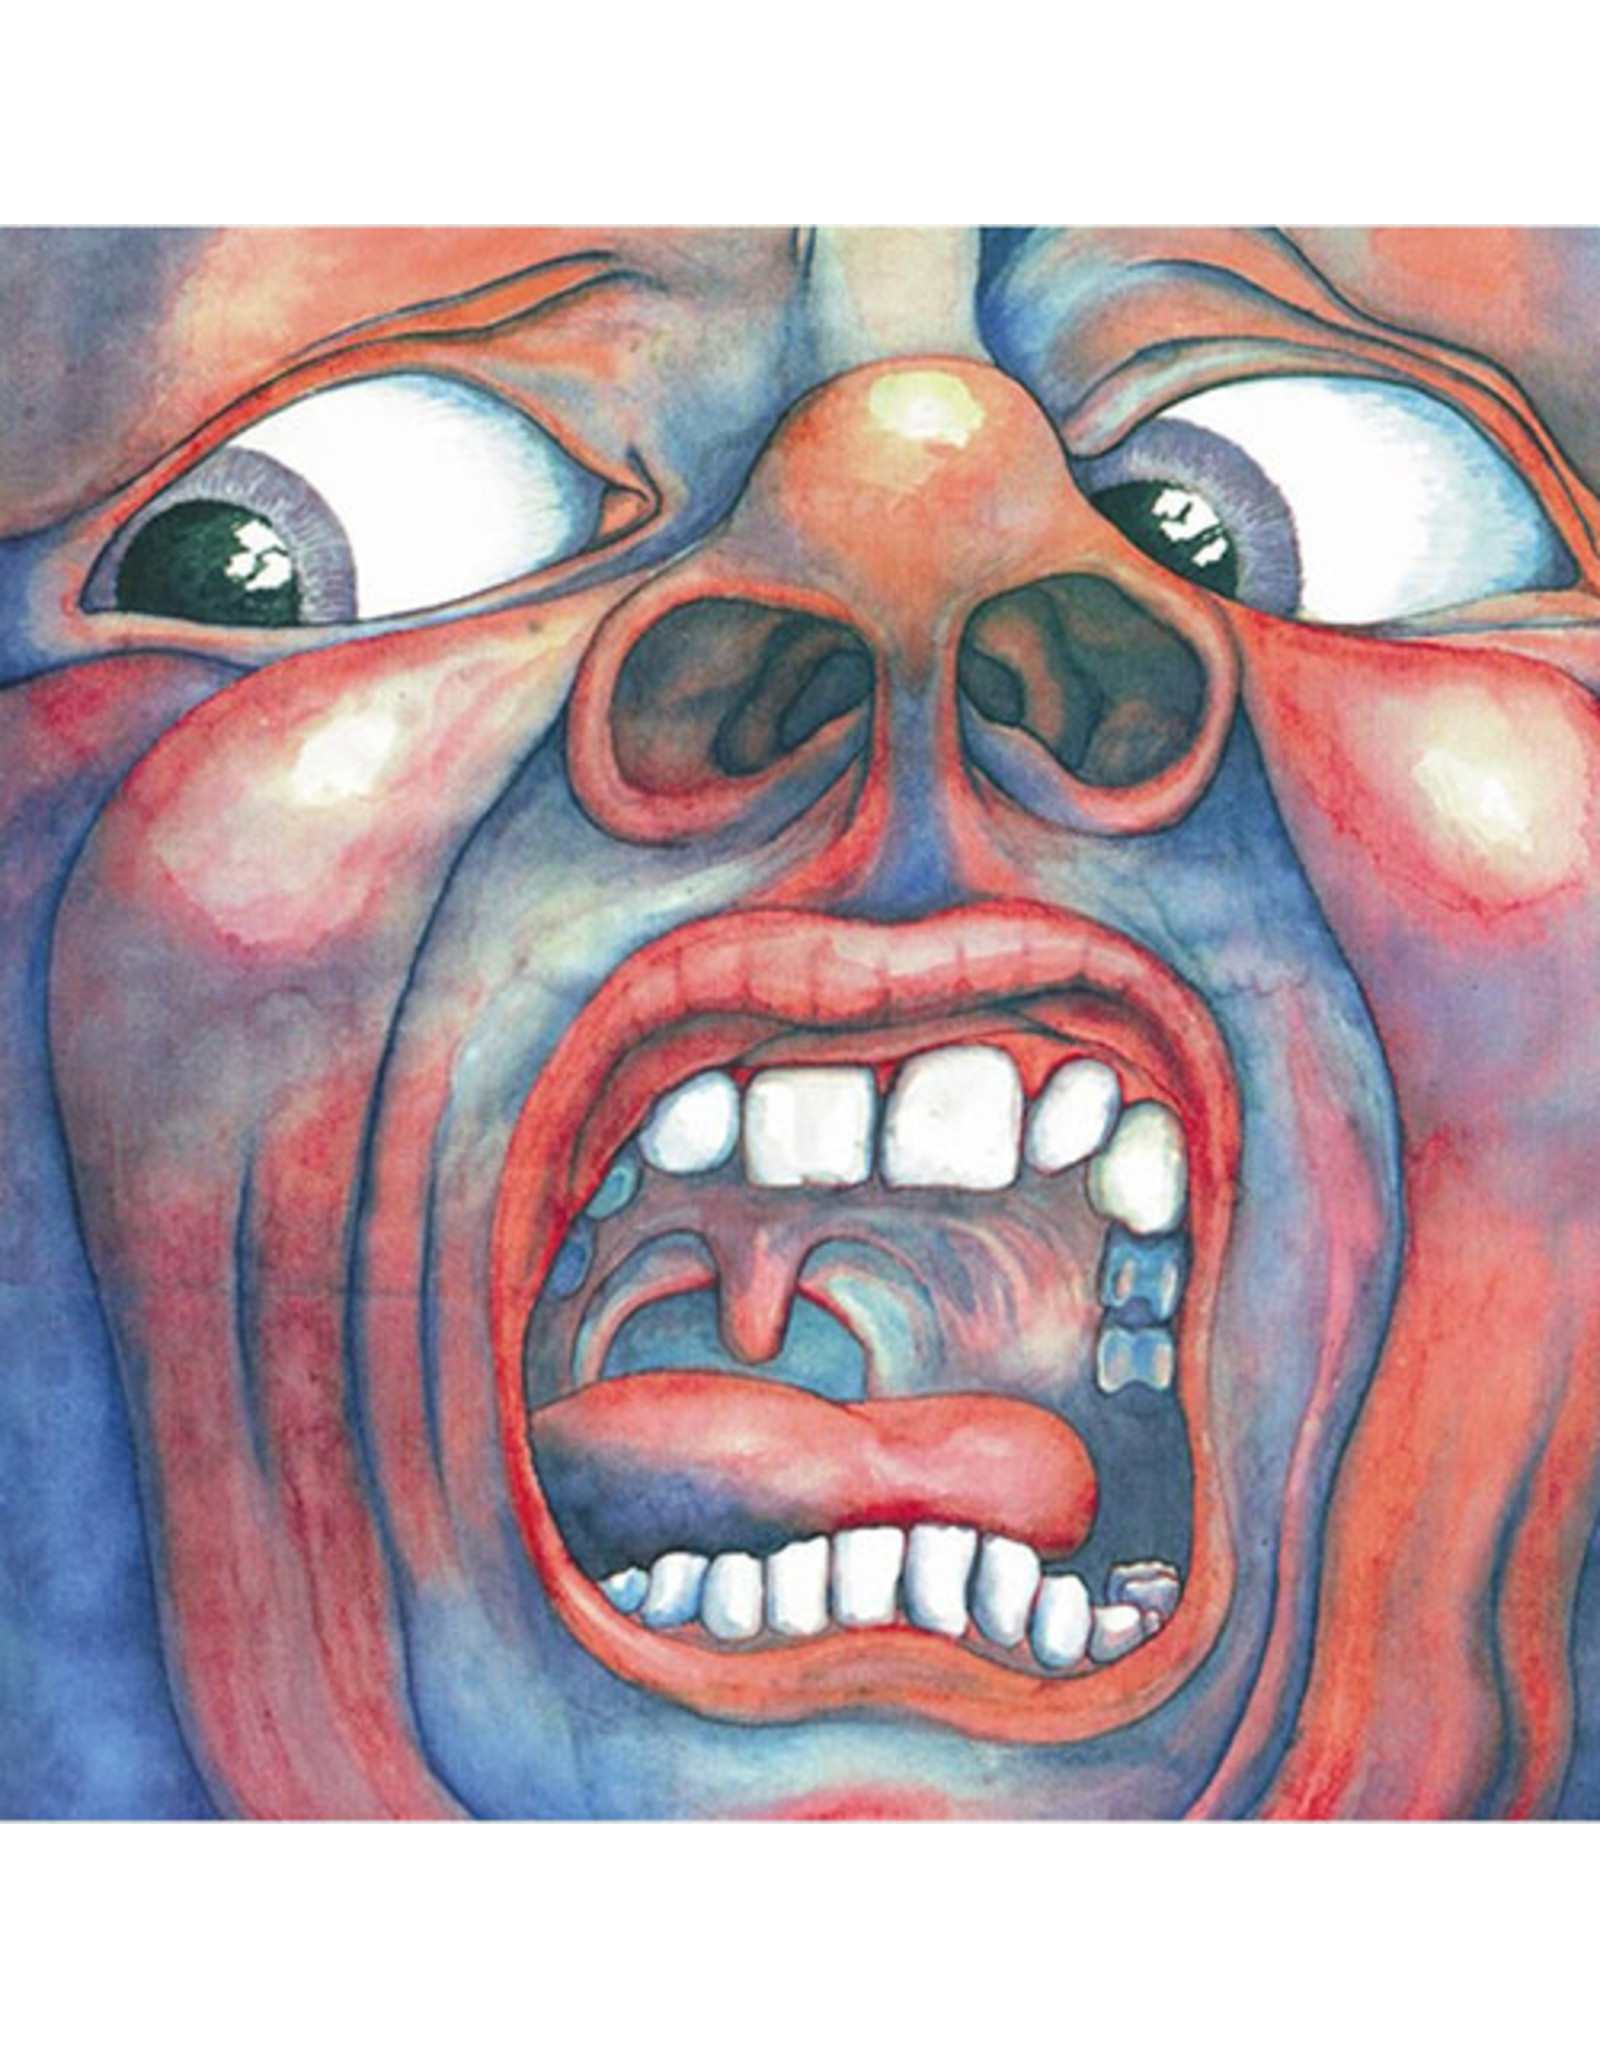 Panegyric King Crimson: In the Court Of the Crimson King (2LP/200g/50th anniversary edition) LP